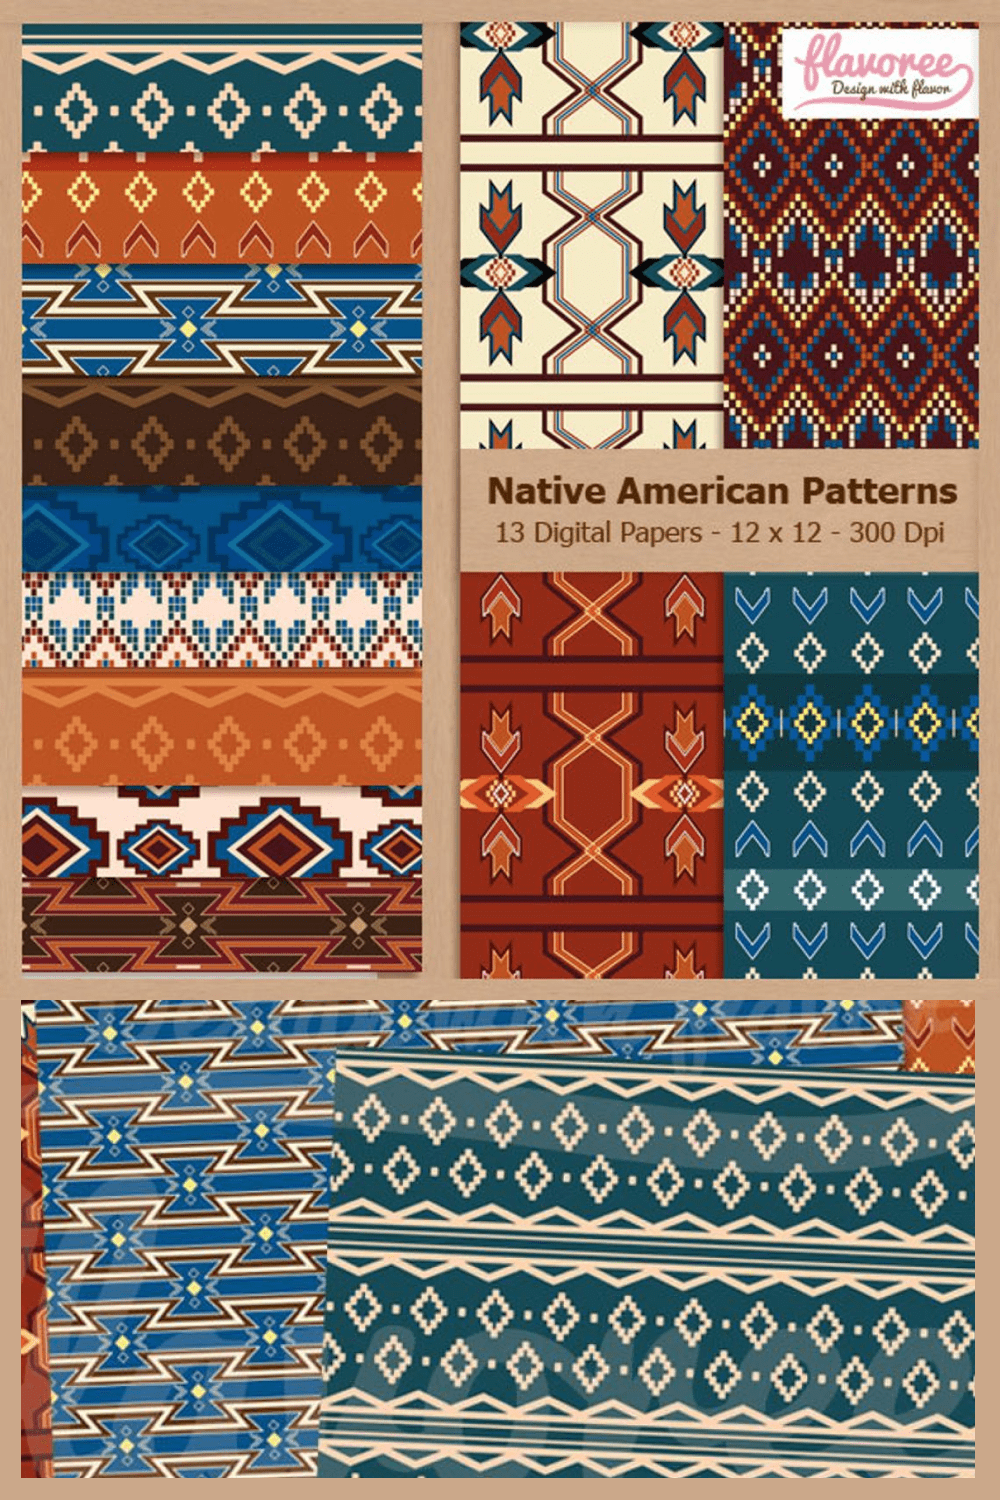 Native American Patterns.